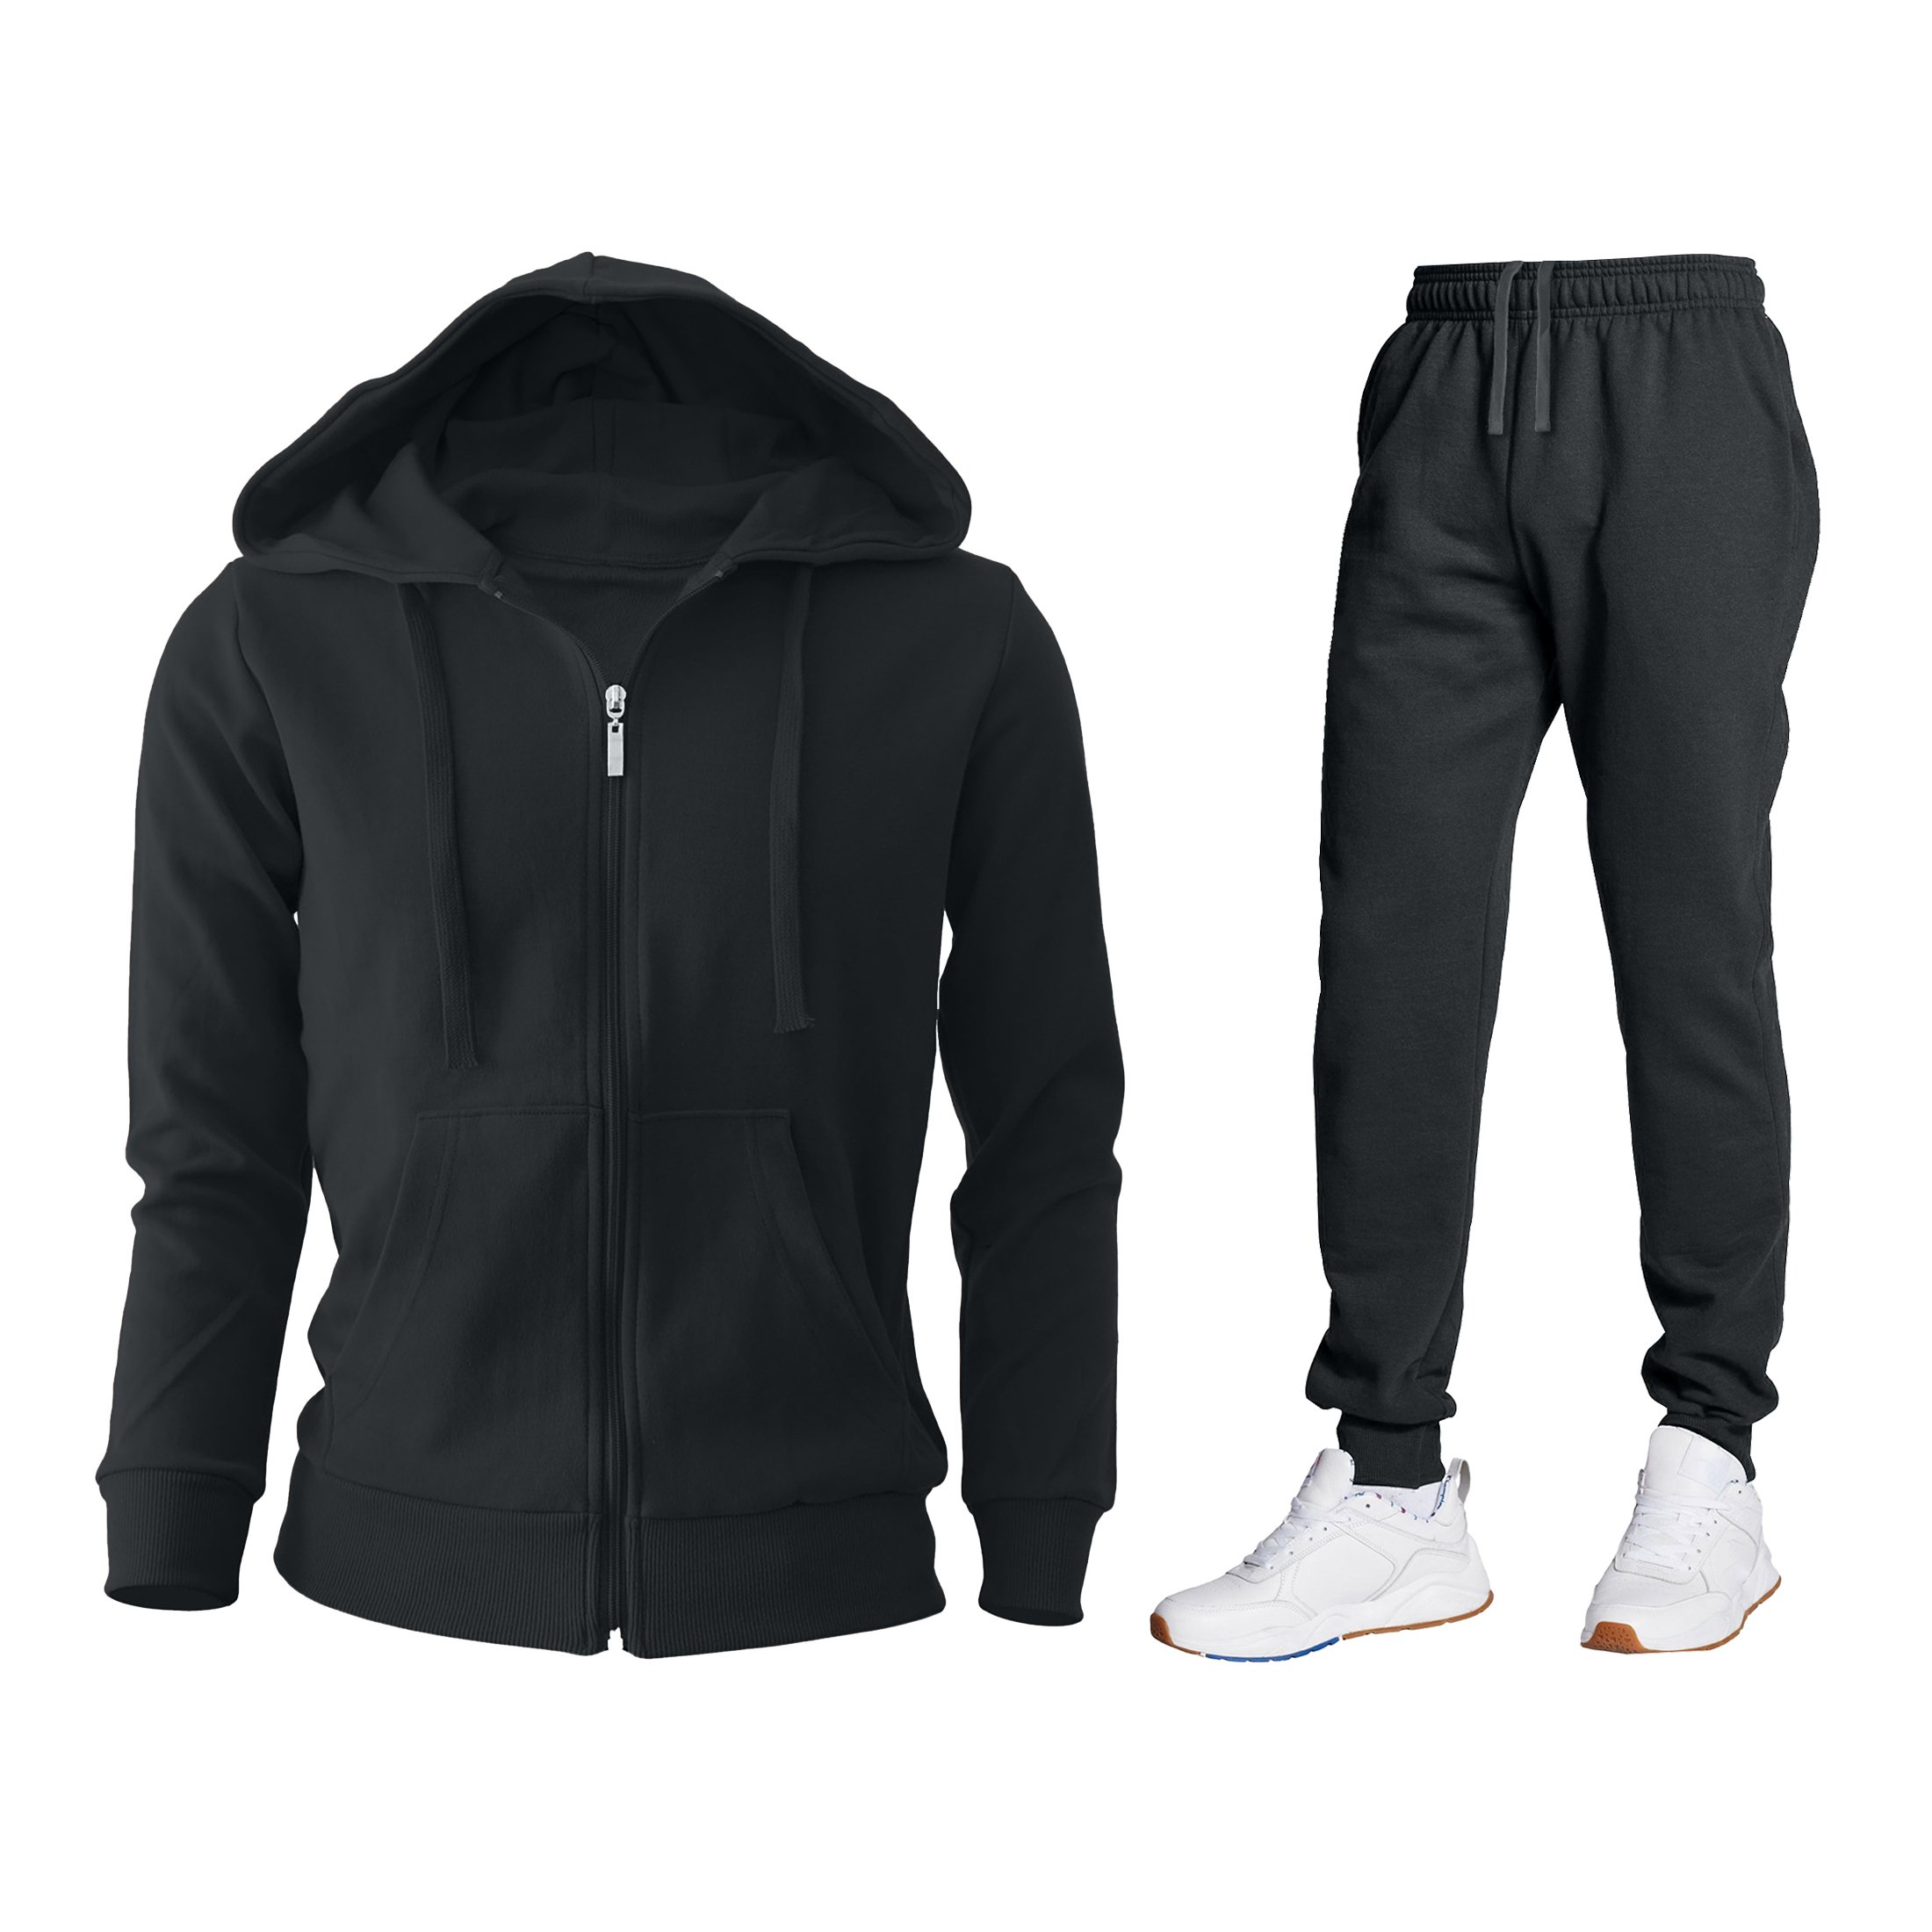 Men's Casual Jogging Suit Track Sports Zip Up Jogger Set - M